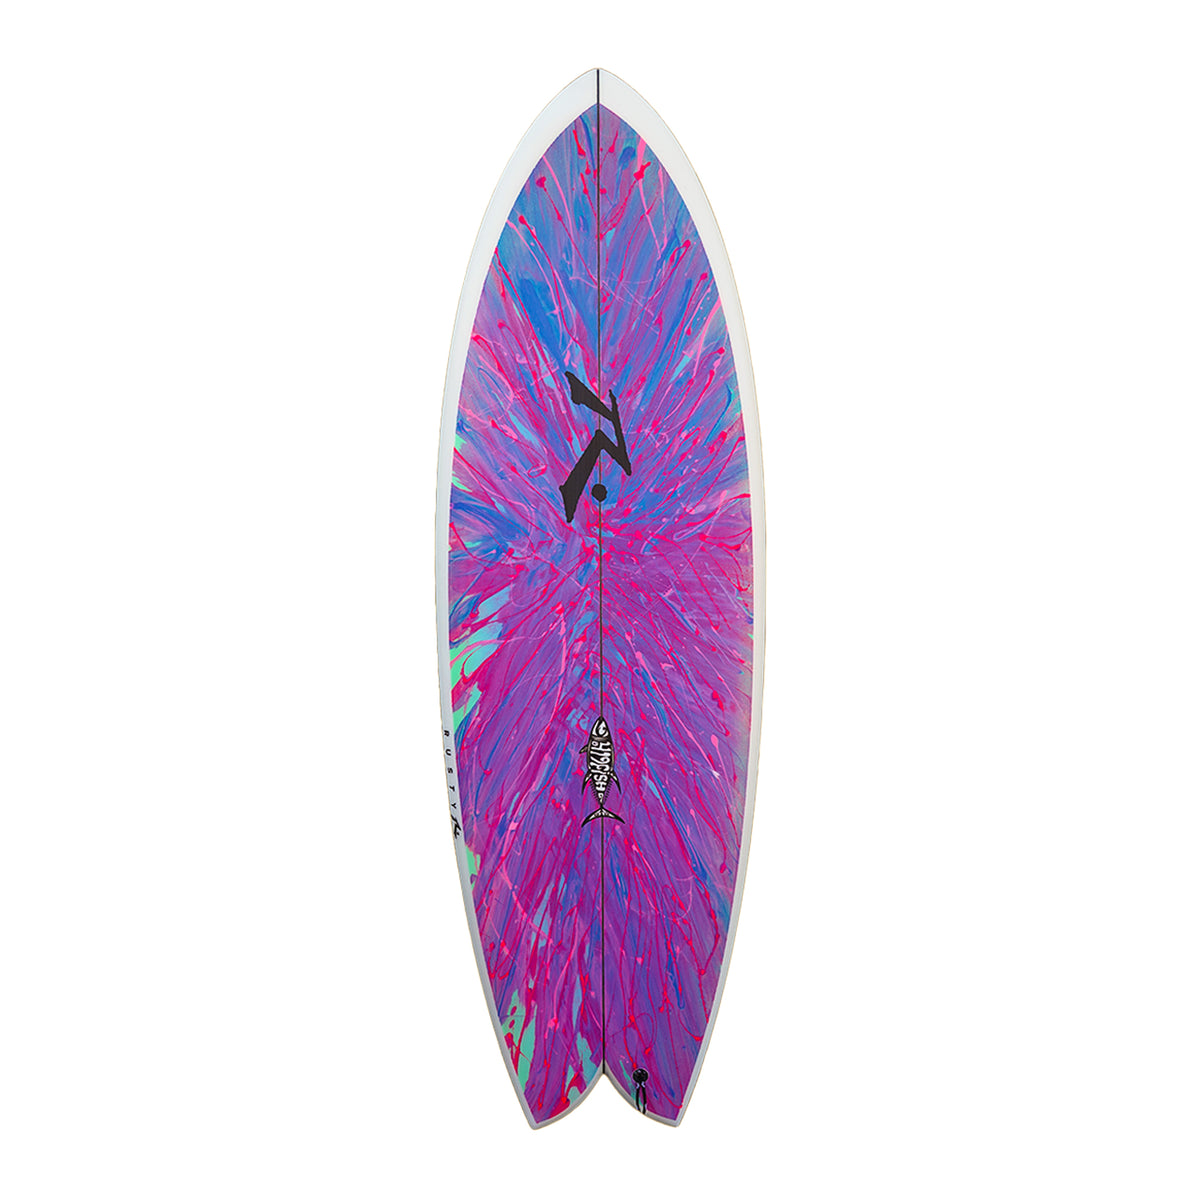 419fish - Alternative - Rusty Surfboards - Top View - Pink Purple Swirl